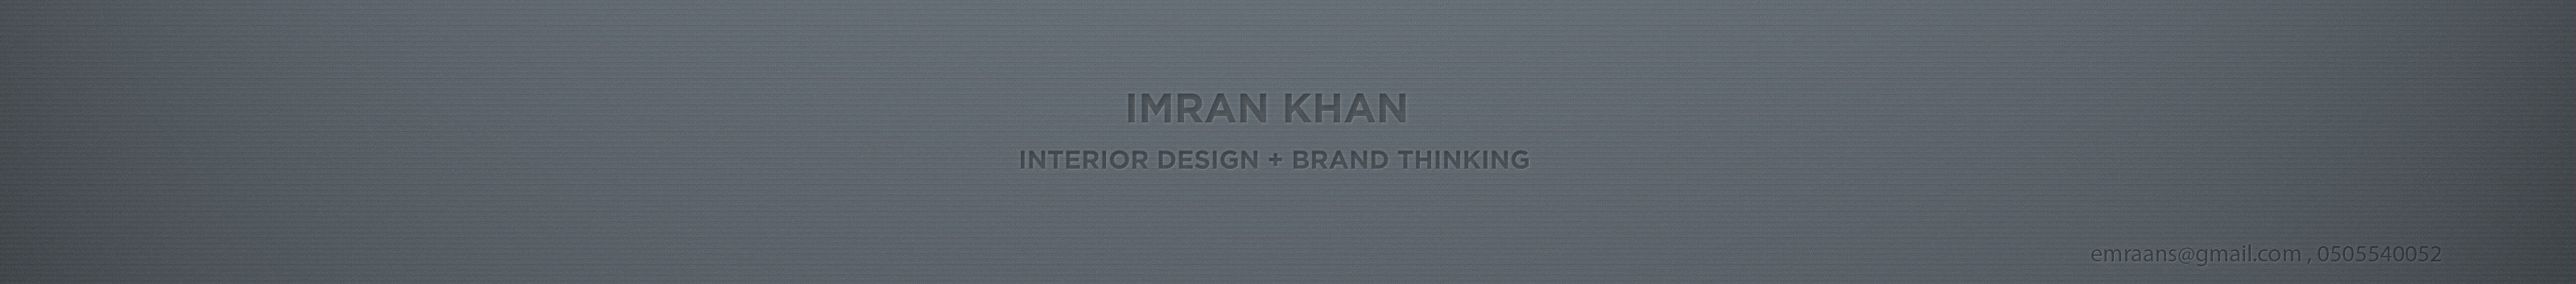 imran khan's profile banner